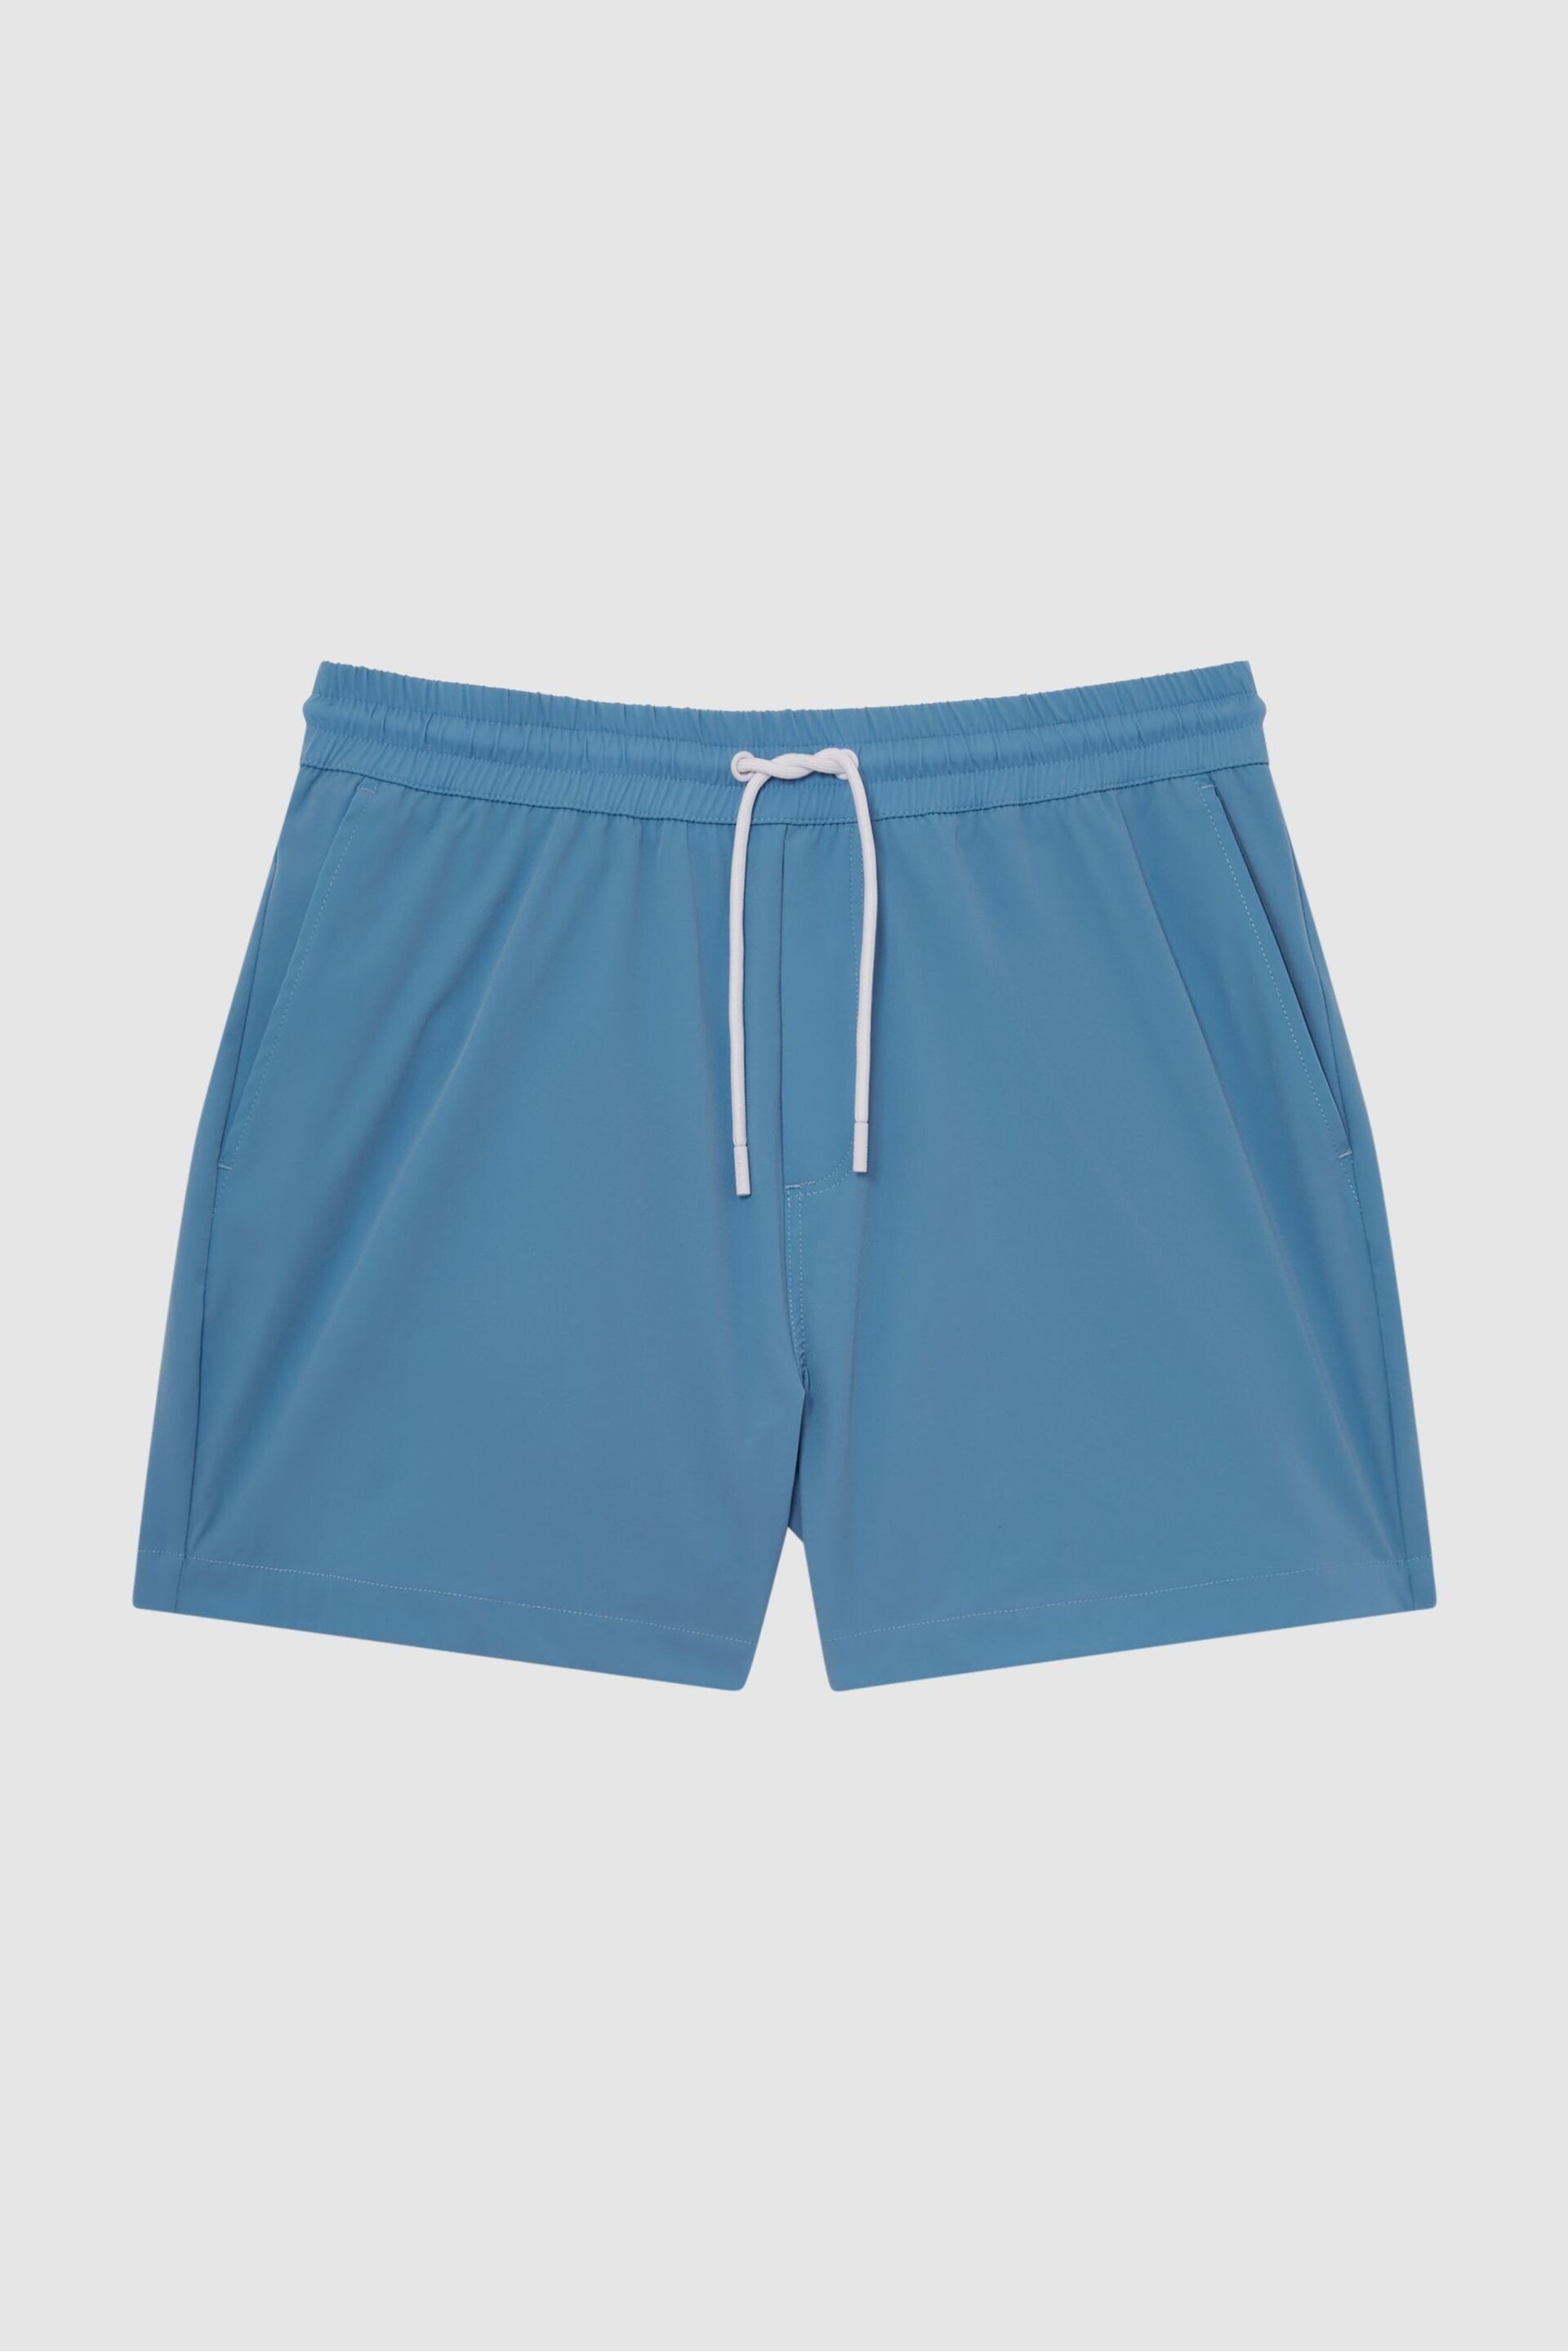 Reiss Turquoise Blue Beach Plain Drawstring Swim Shorts - Image 2 of 7